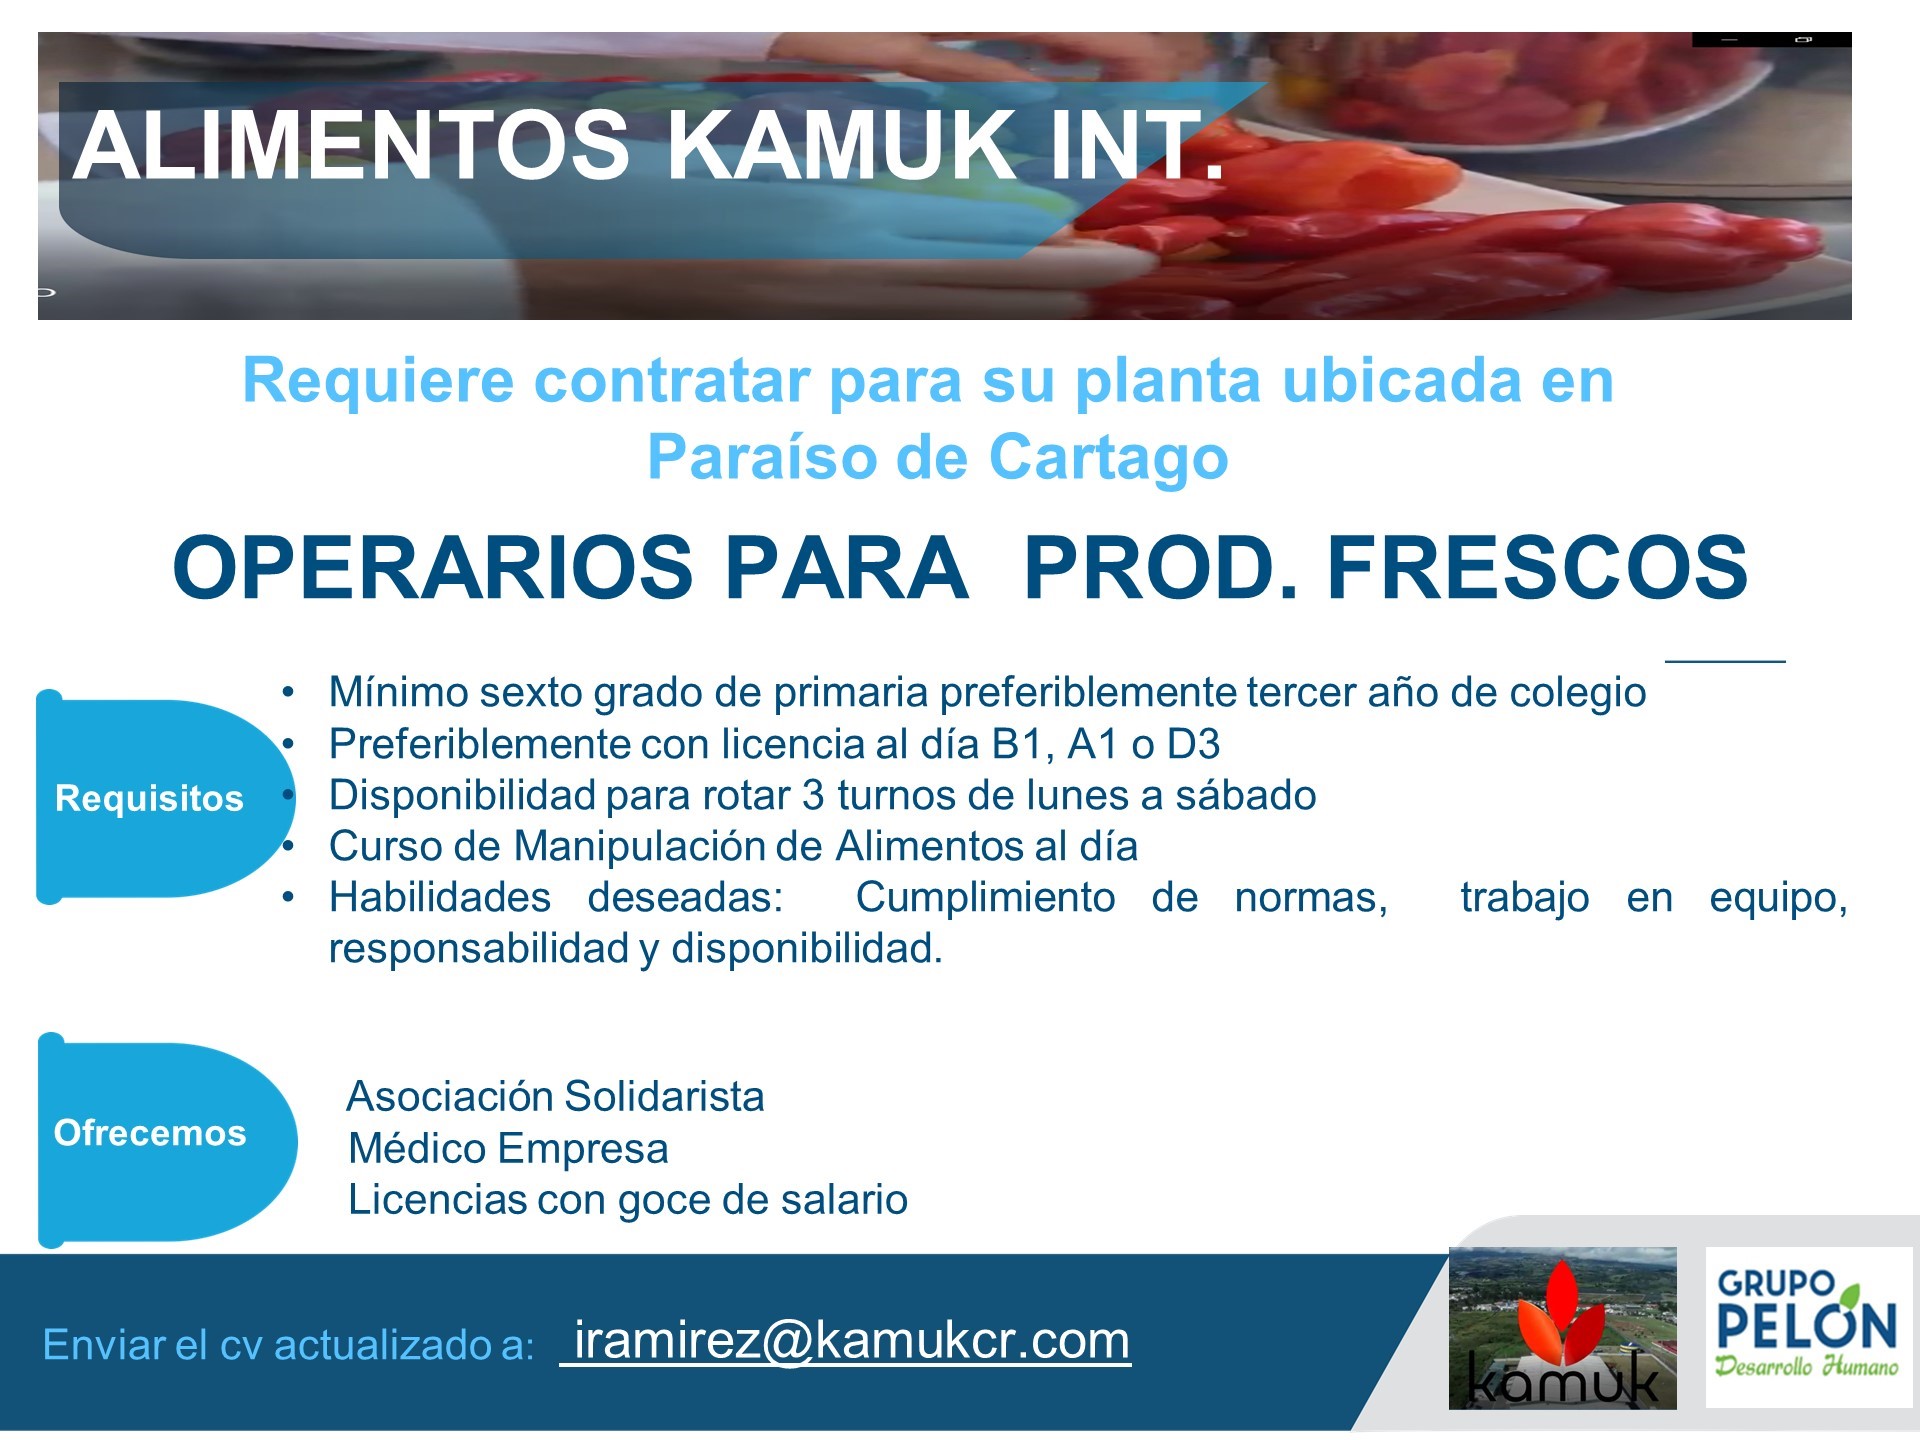 Ofertas de empleo por la Empresa Alimentos Kámuk Int. C.R. S.A. 